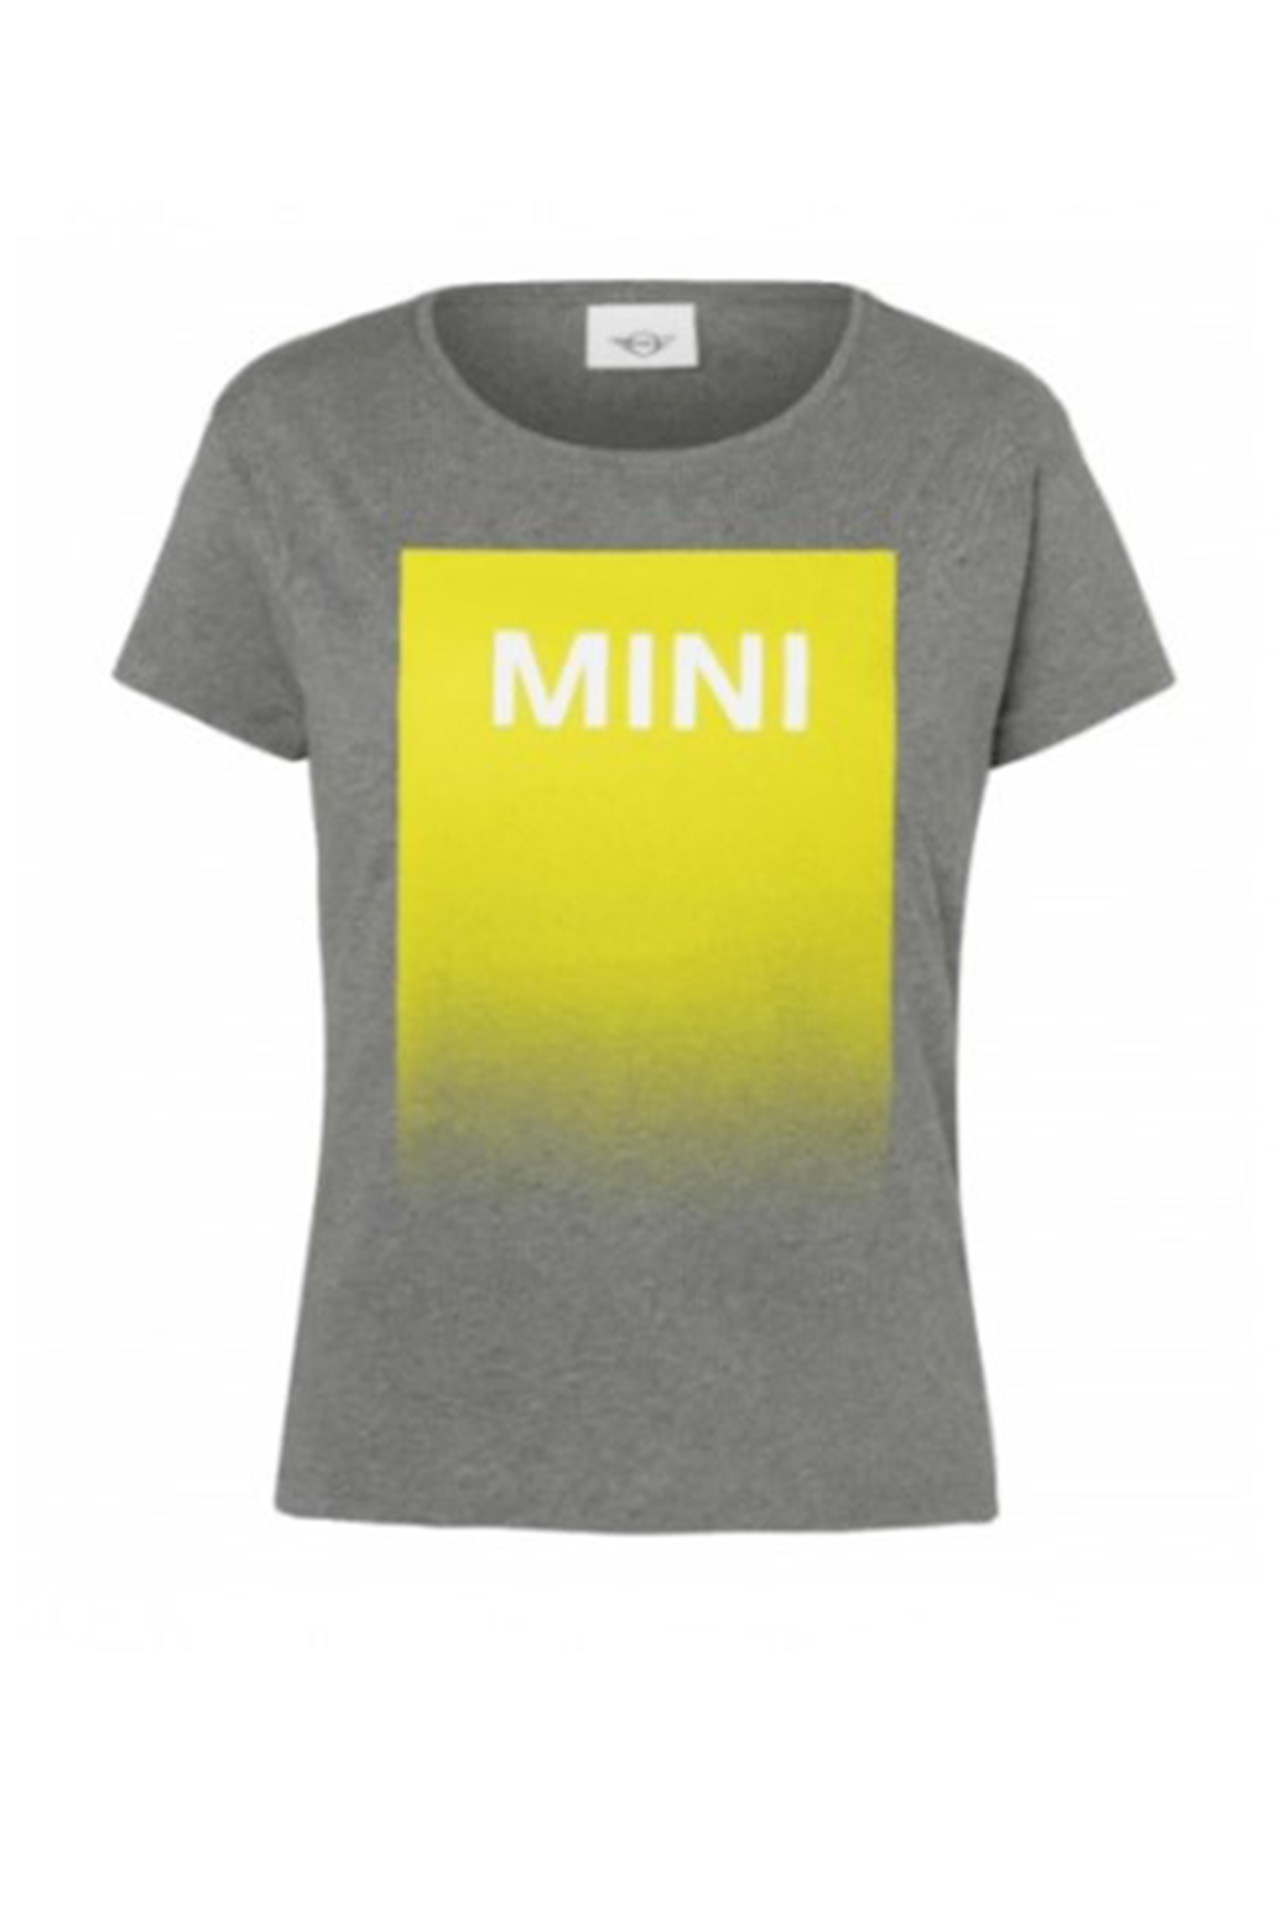 Camiseta negra manga corta de mujer MINI